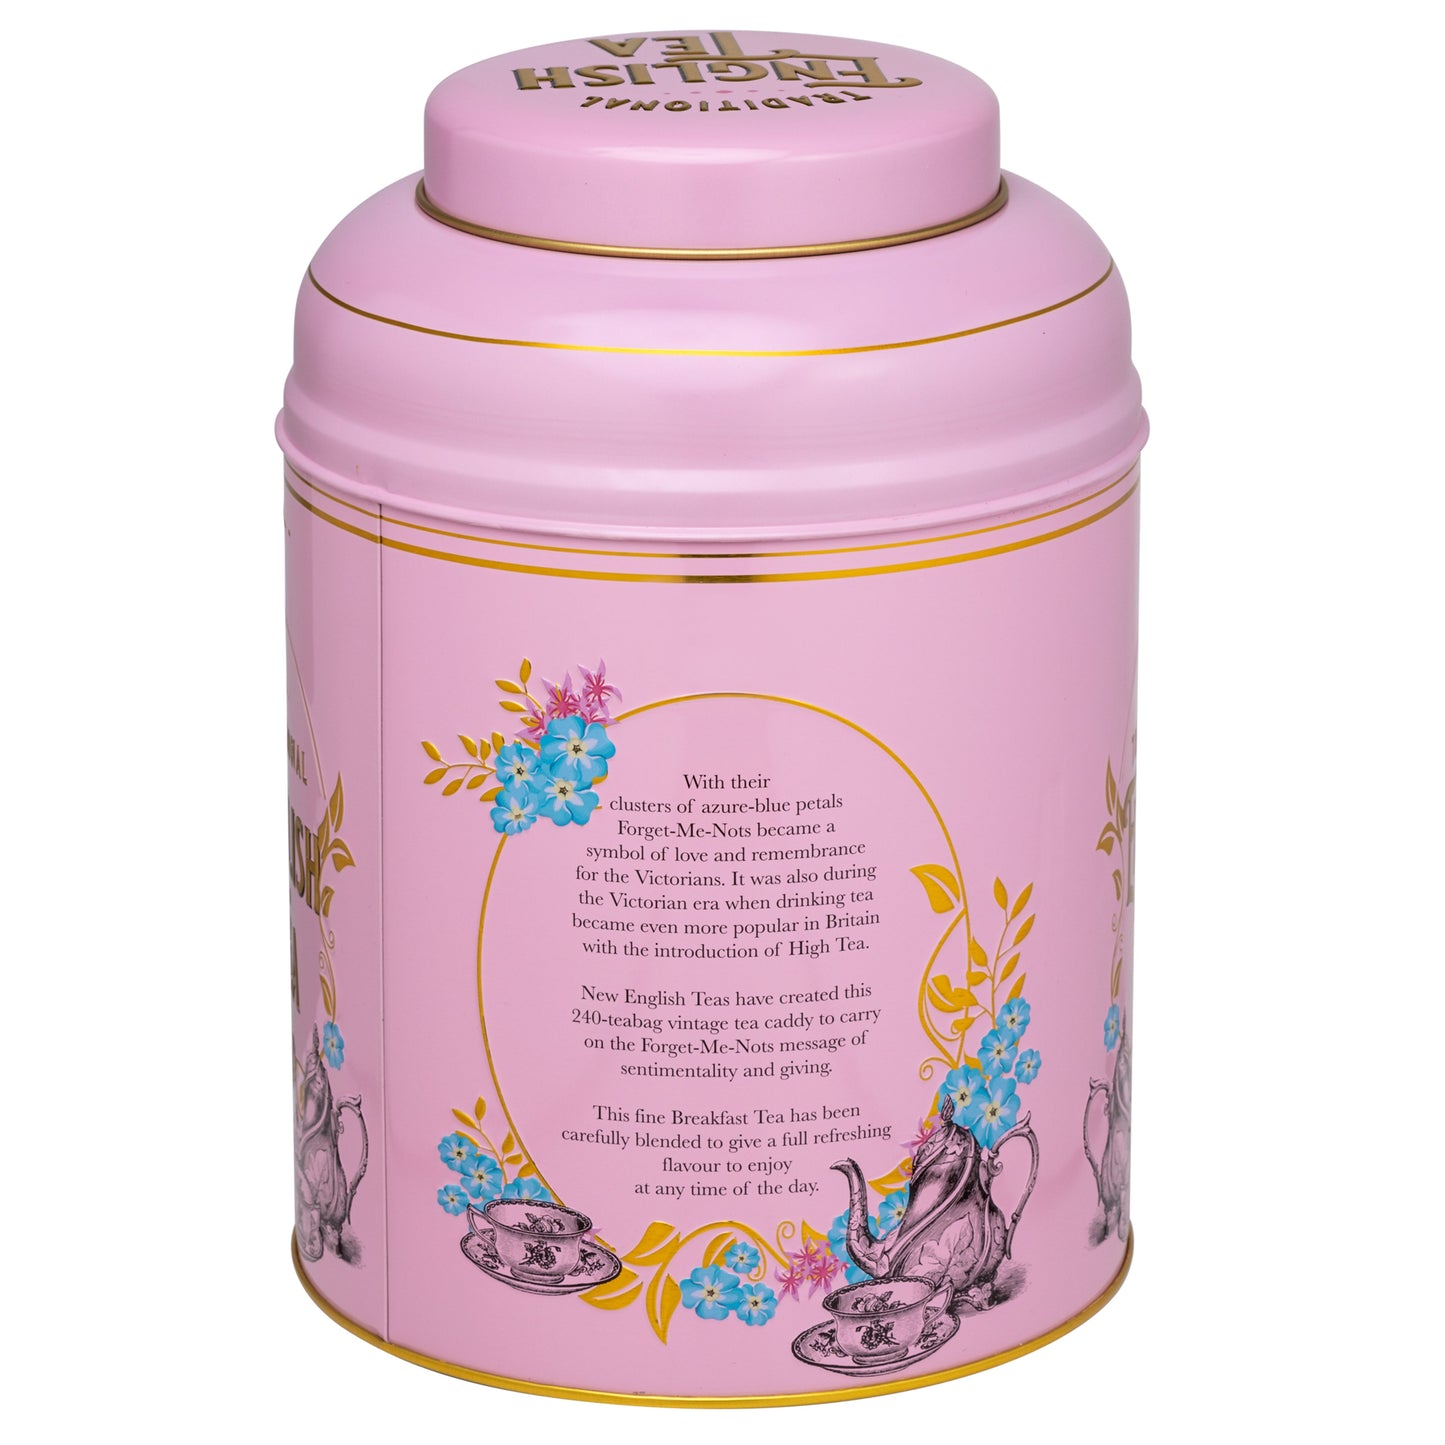 Vintage Victorian Rose-Pink Tea Caddy with 240 English 1869 Blend Teabags Black Tea New English Teas 